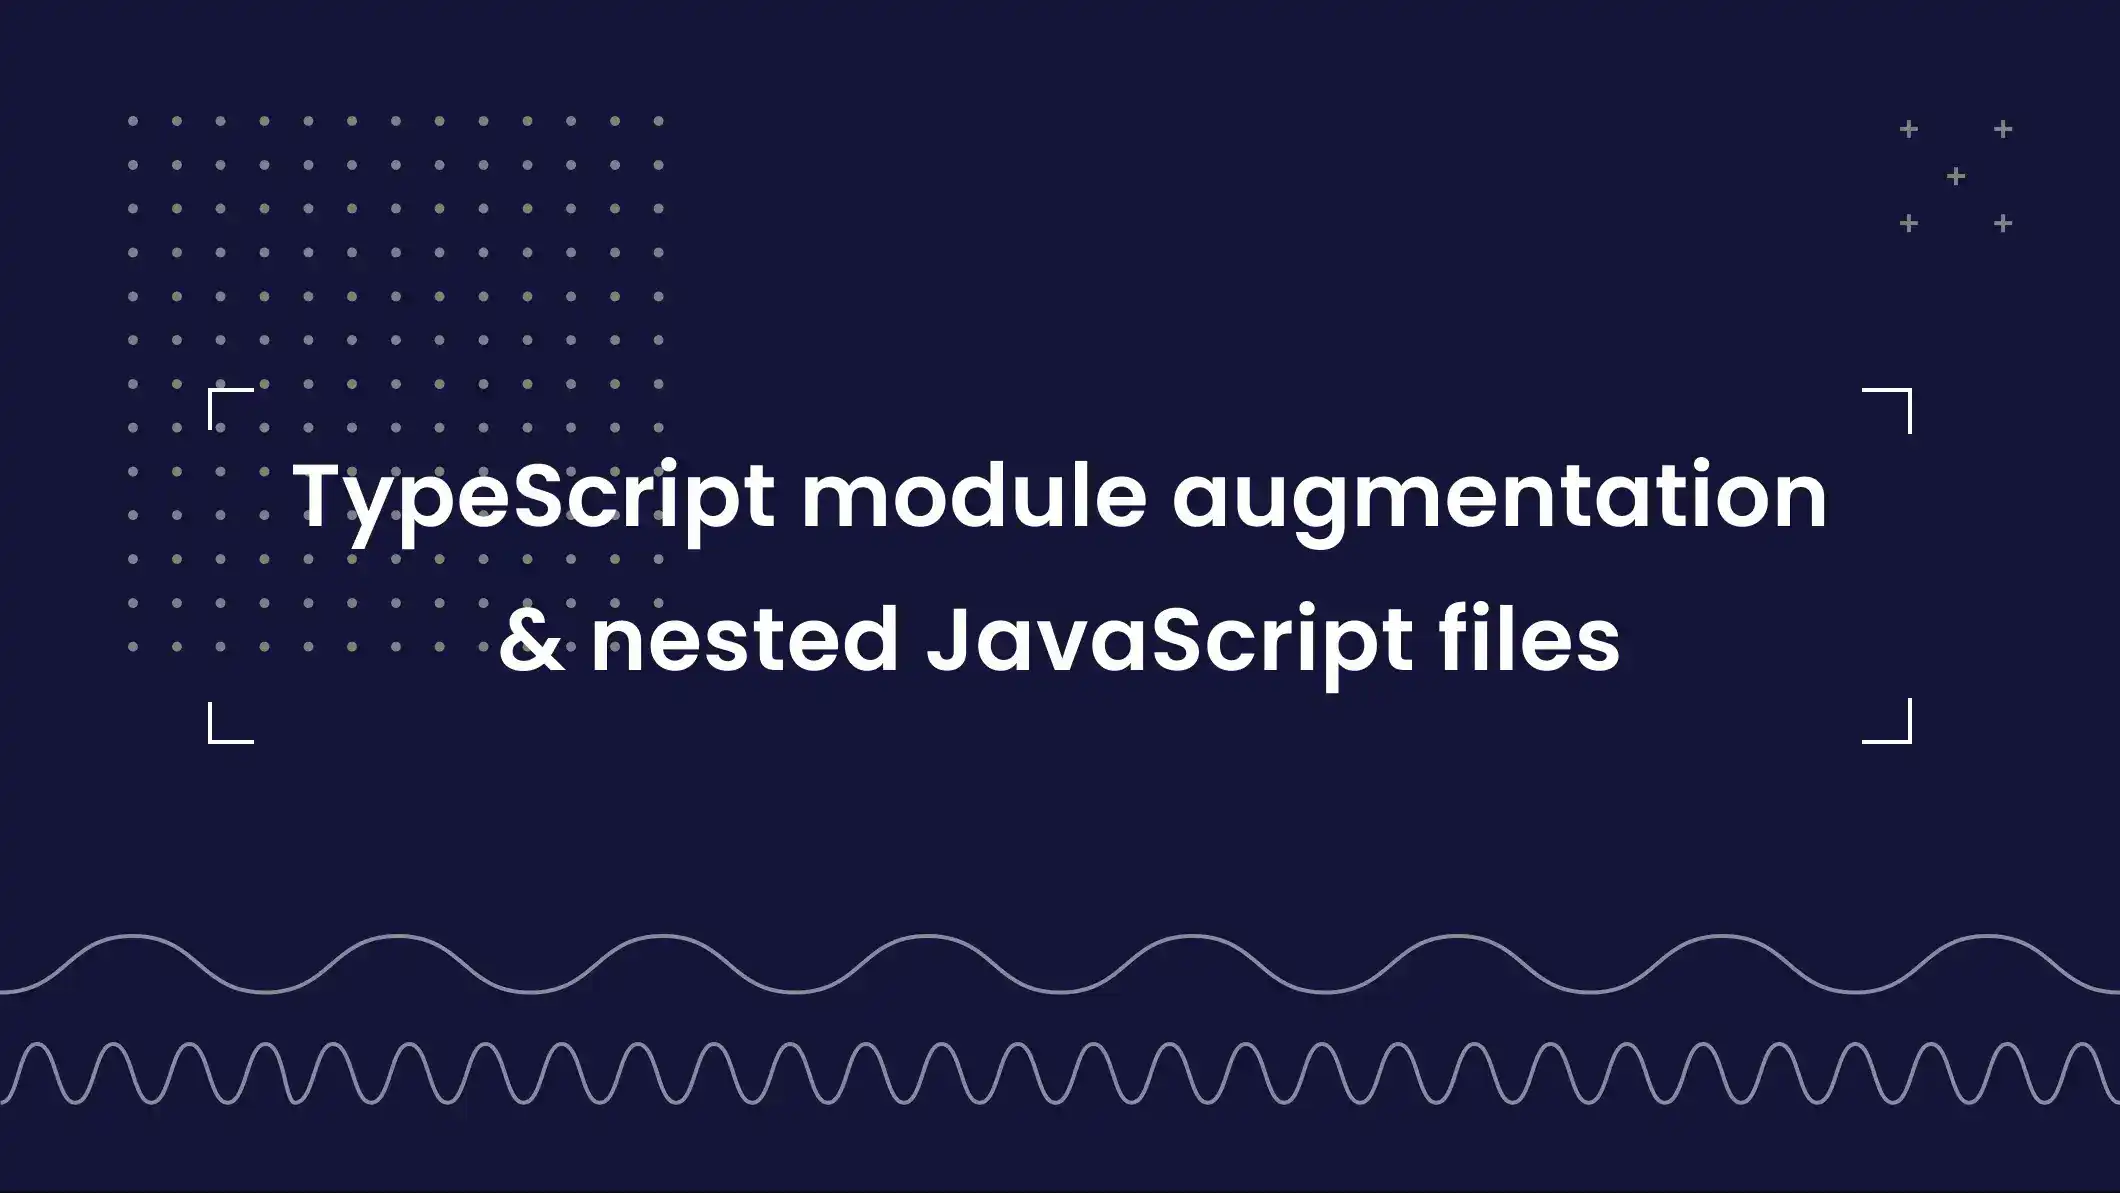 TypeScript module augmentation and handling nested JavaScript files